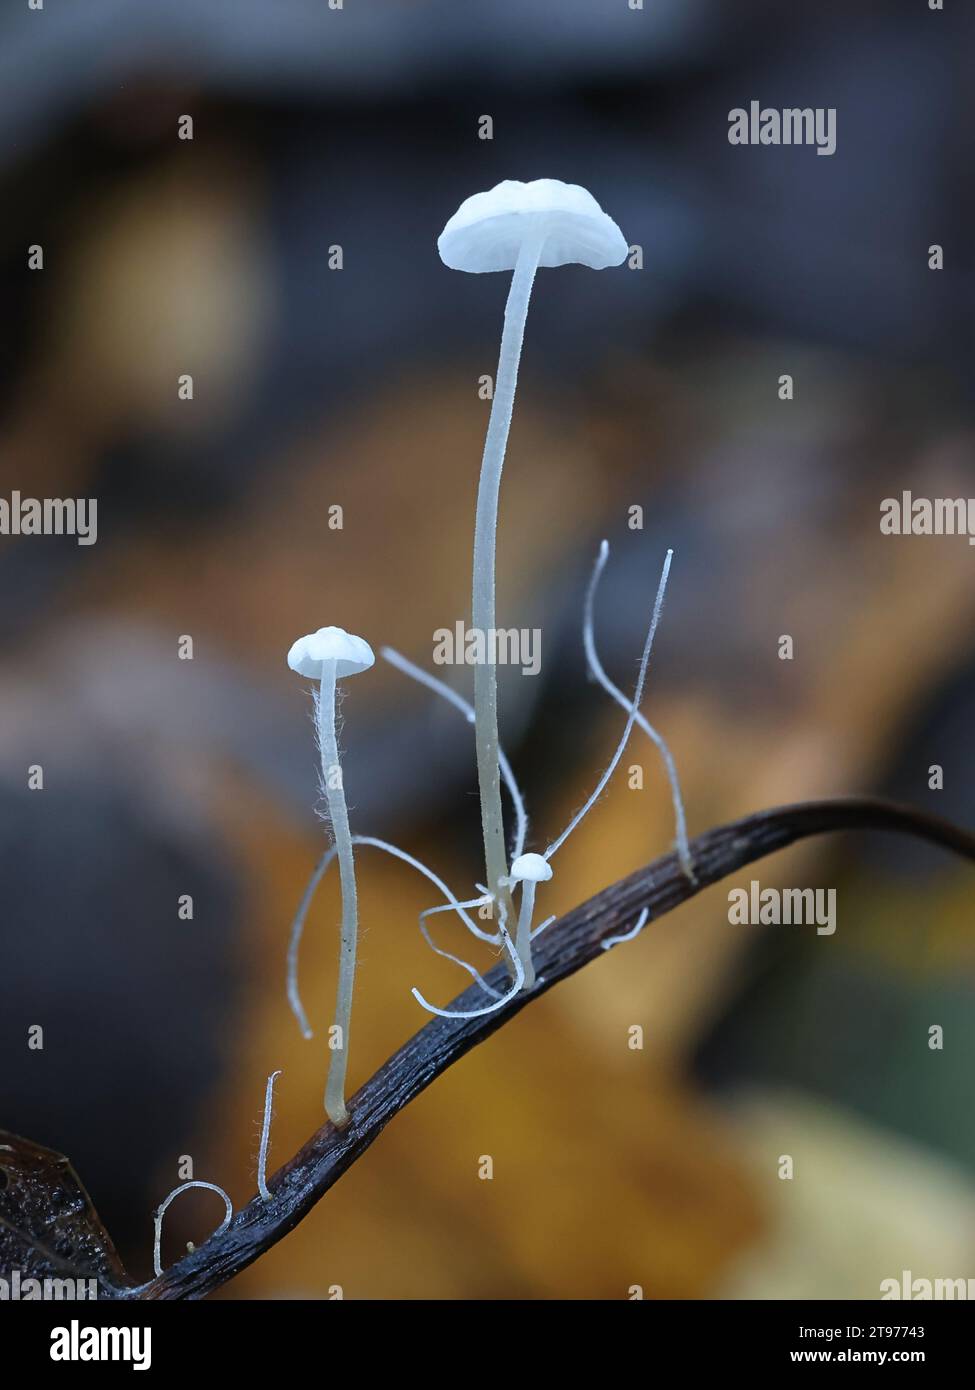 Rhizomarasmius setosus, also called Marasmius setosus, commonly known as hairy stem parachute or beachleaf parachute, wild mushroom from Finland Stock Photo